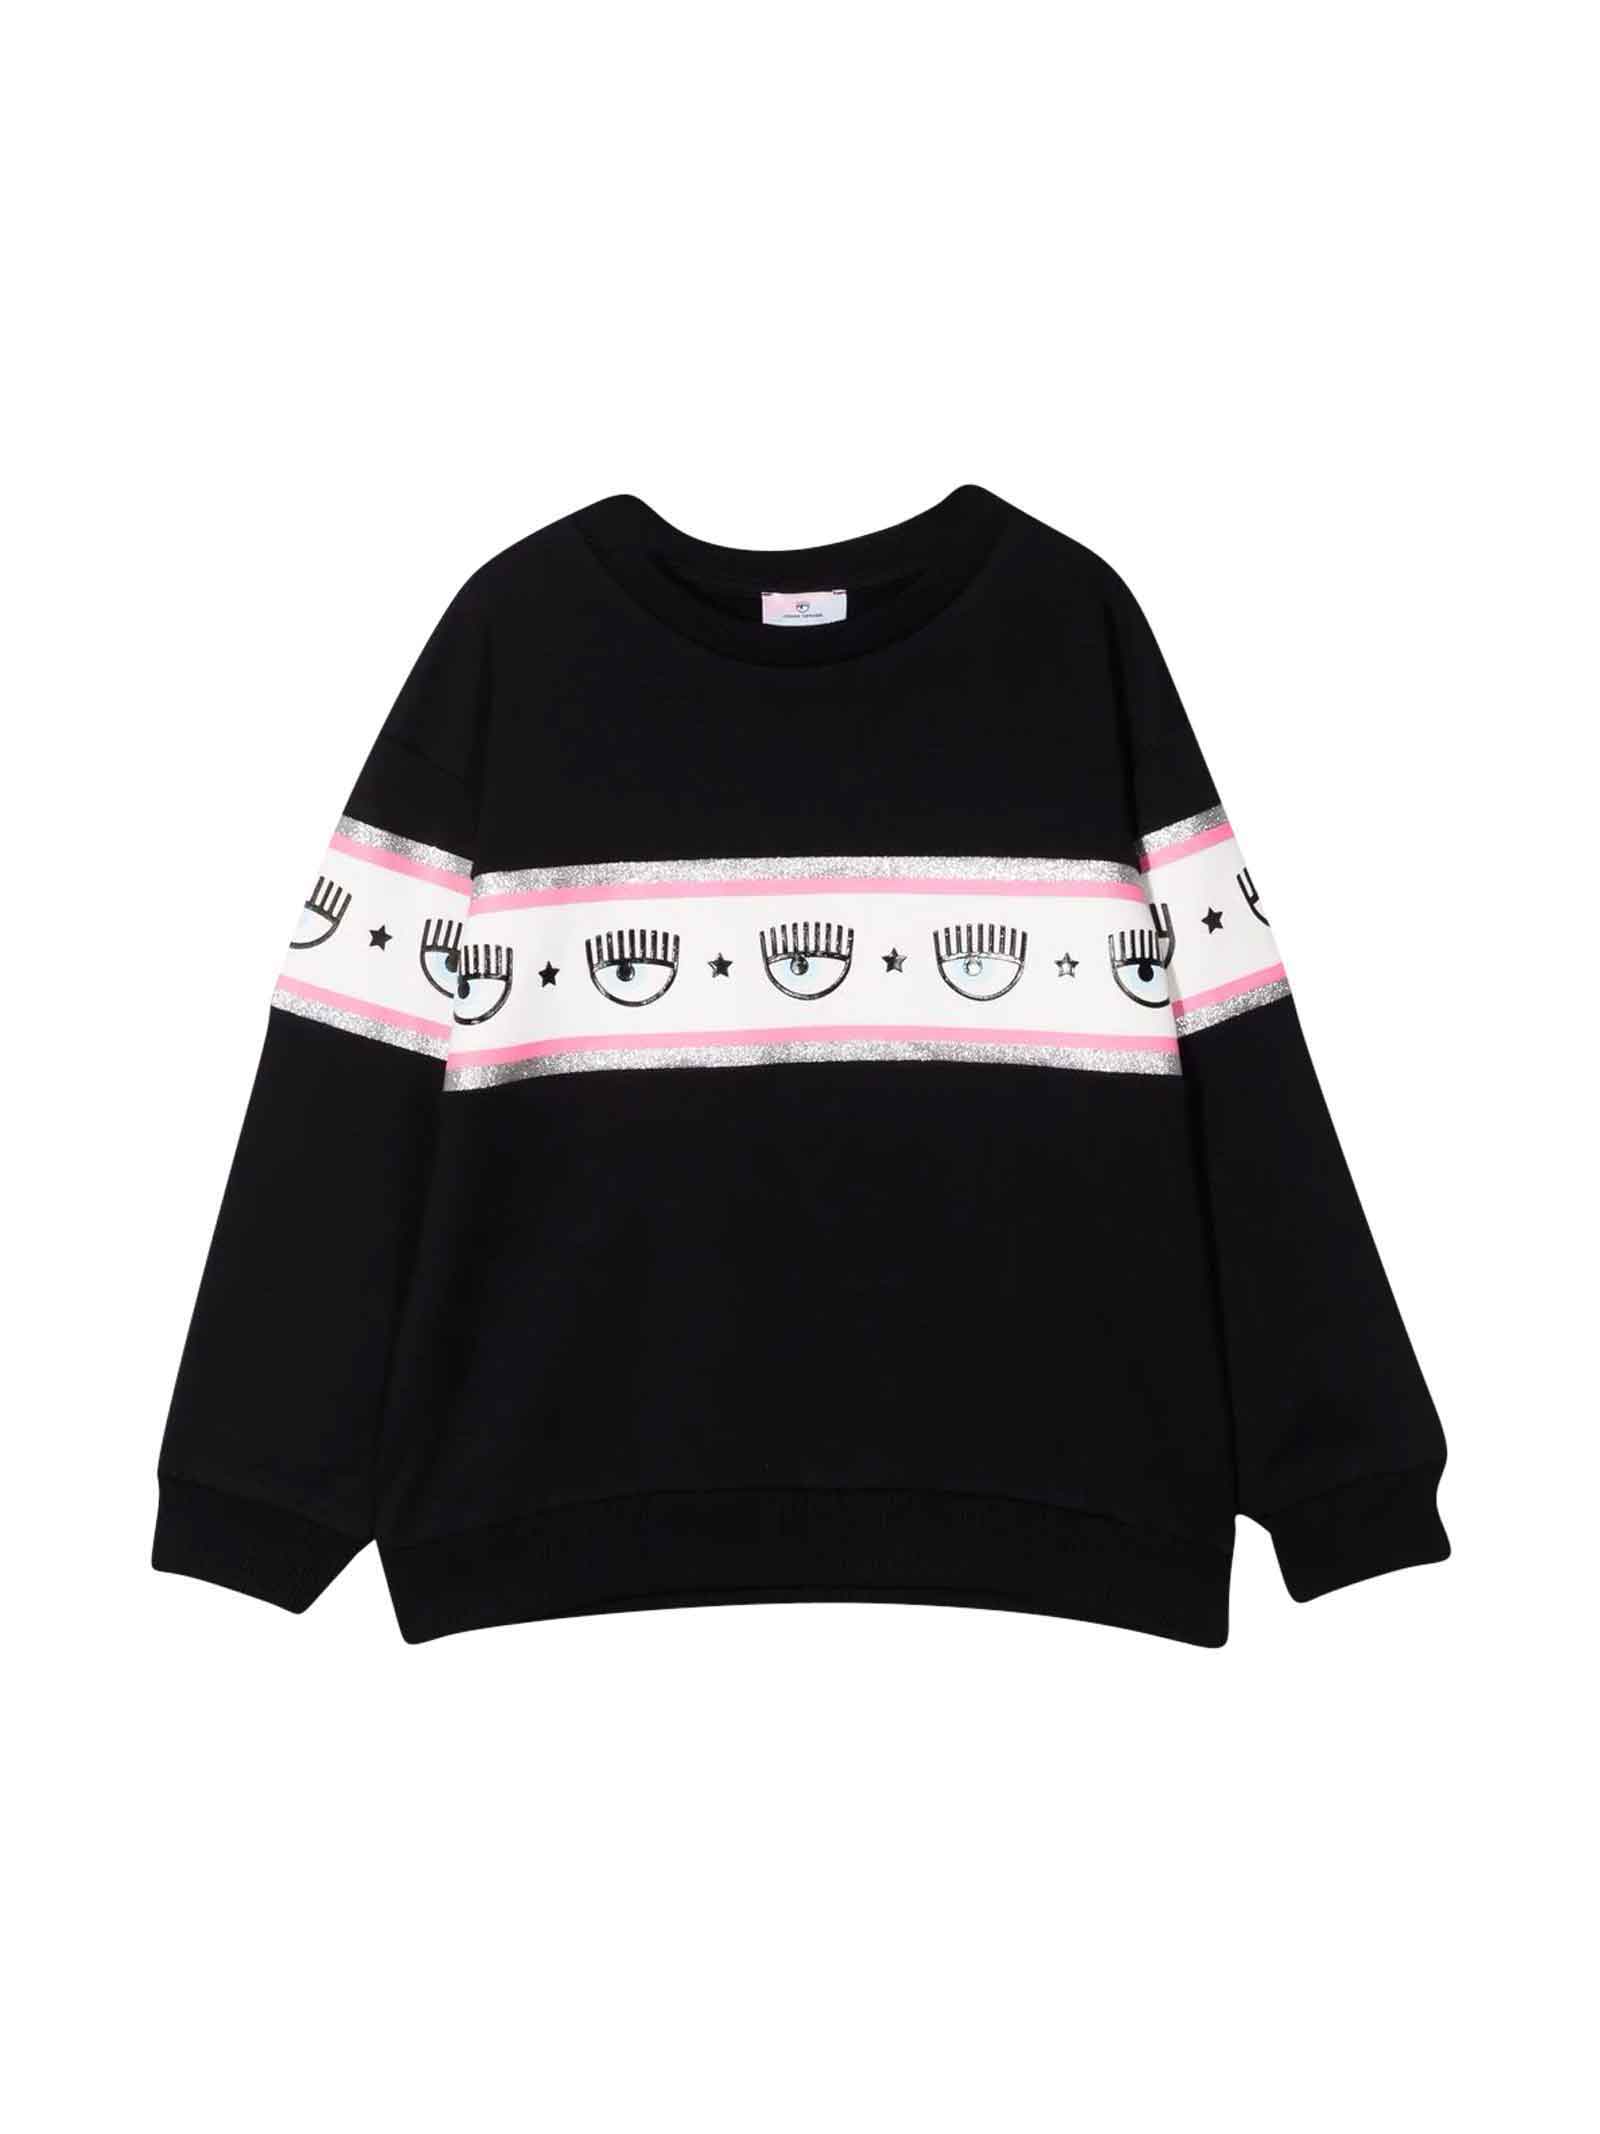 Chiara Ferragni Black Girl Sweatshirt